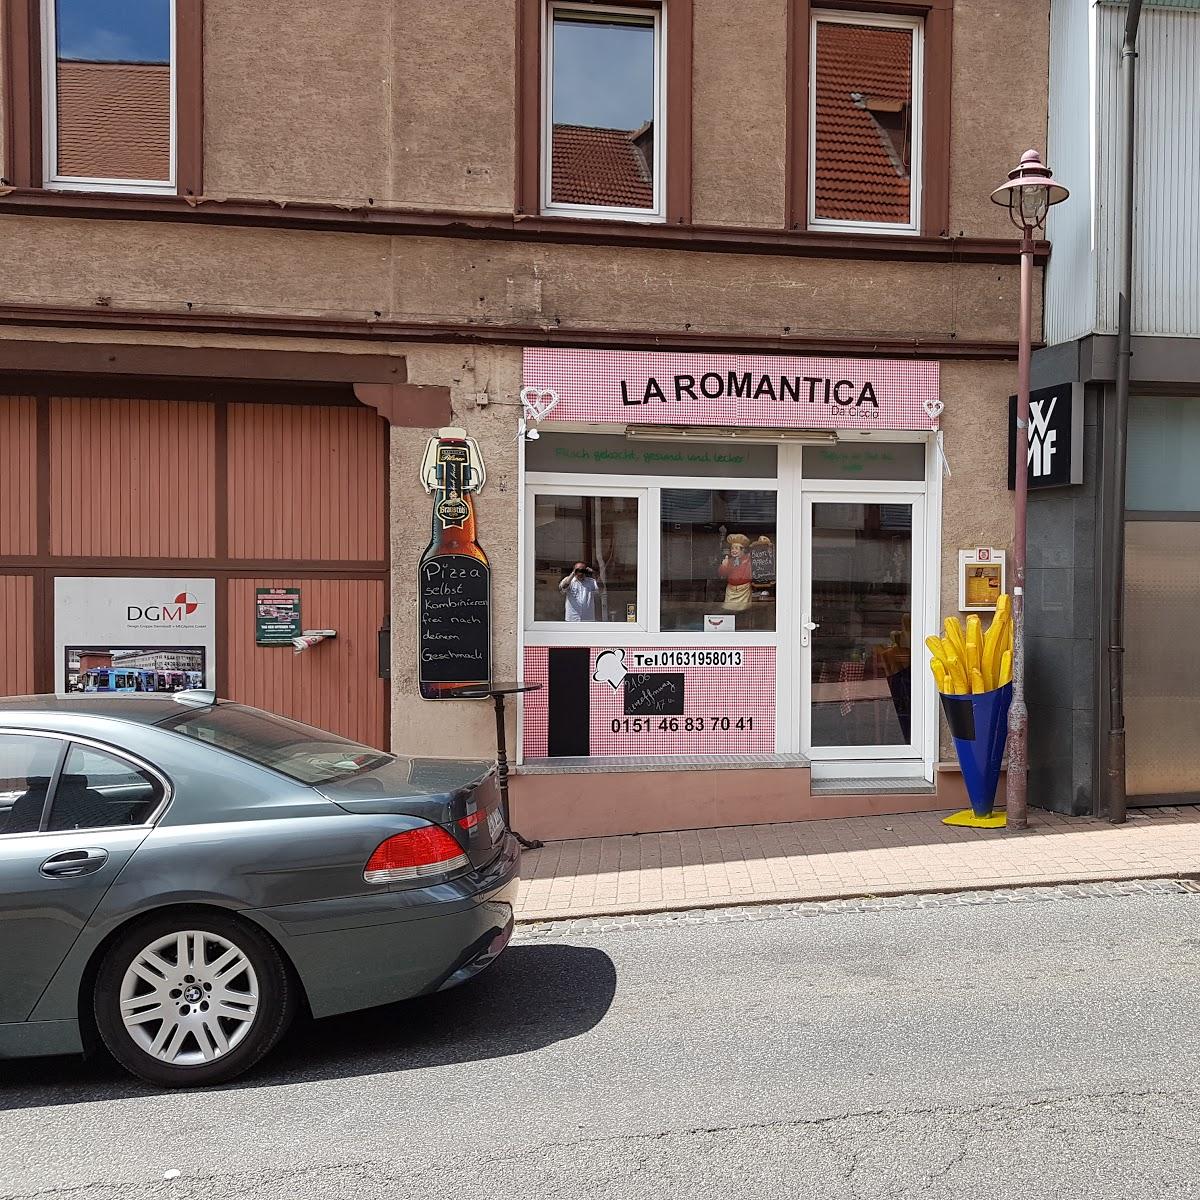 Restaurant "La Romantica" in Roßdorf